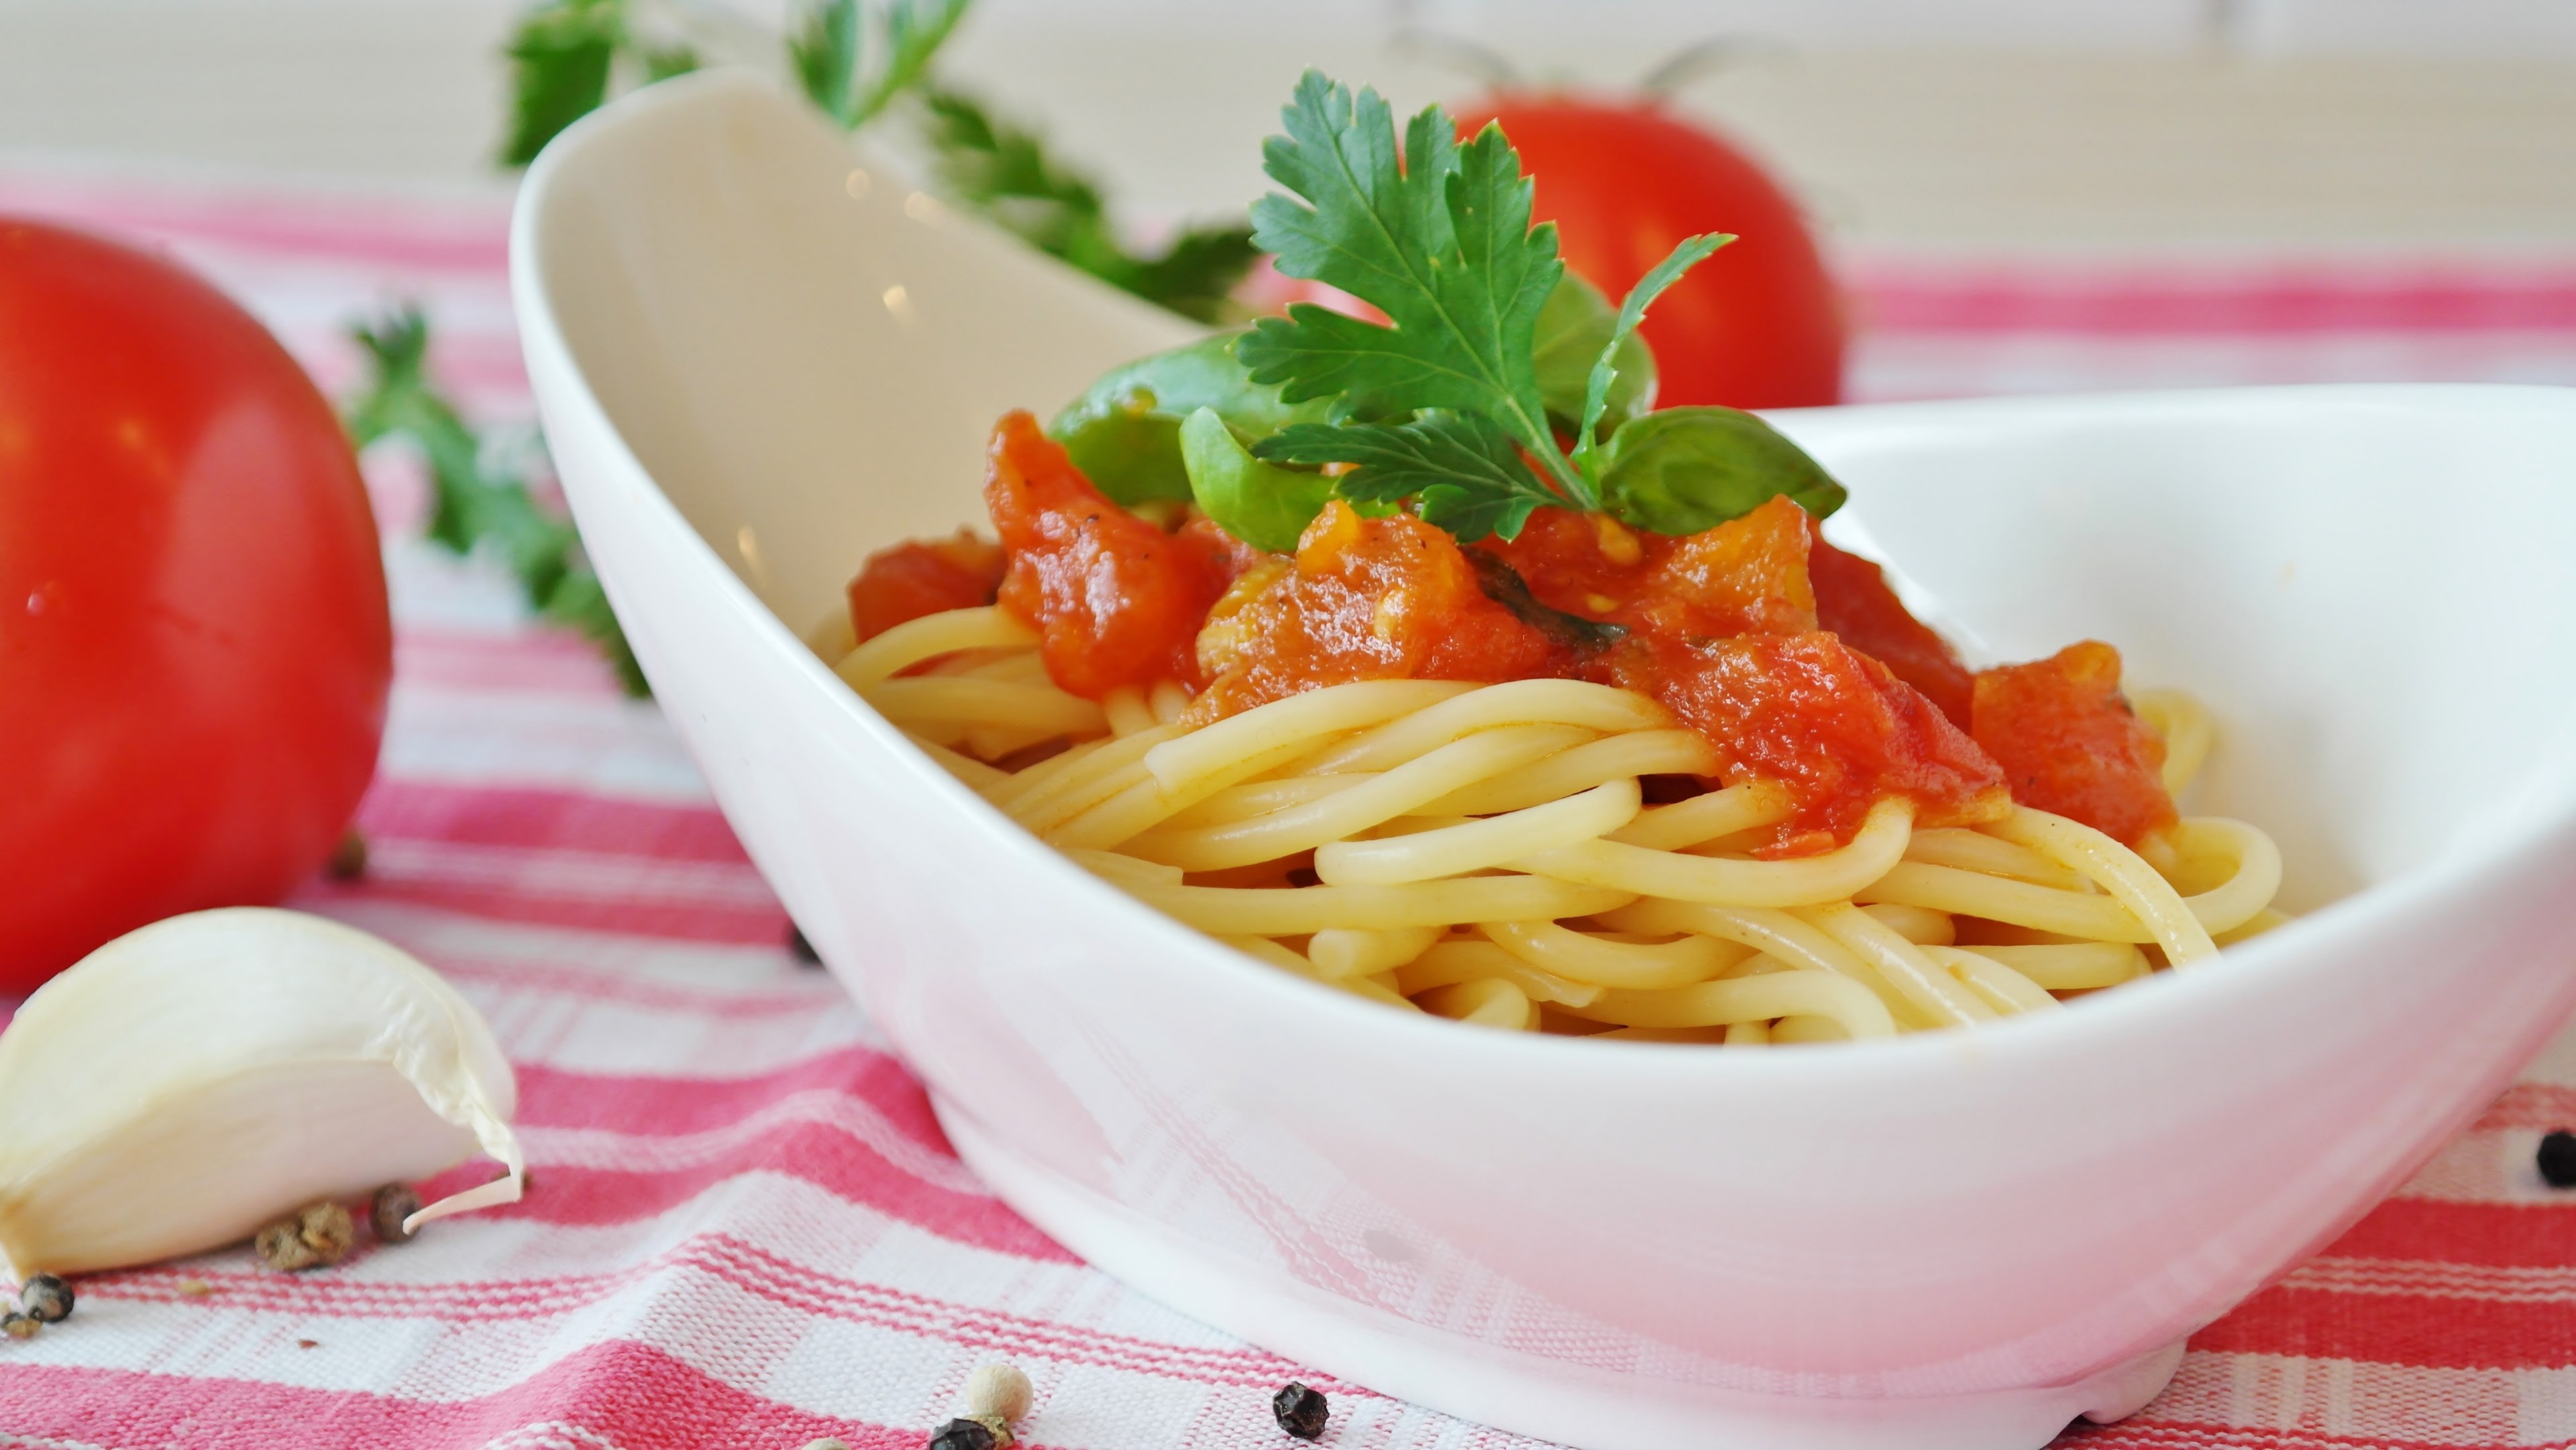 #3840x2161 #spaghetti #tomatoes #tomato Sauce #pasta - Tomat Aneka Pasta Italia Tomato Sauce Vegetarian , HD Wallpaper & Backgrounds